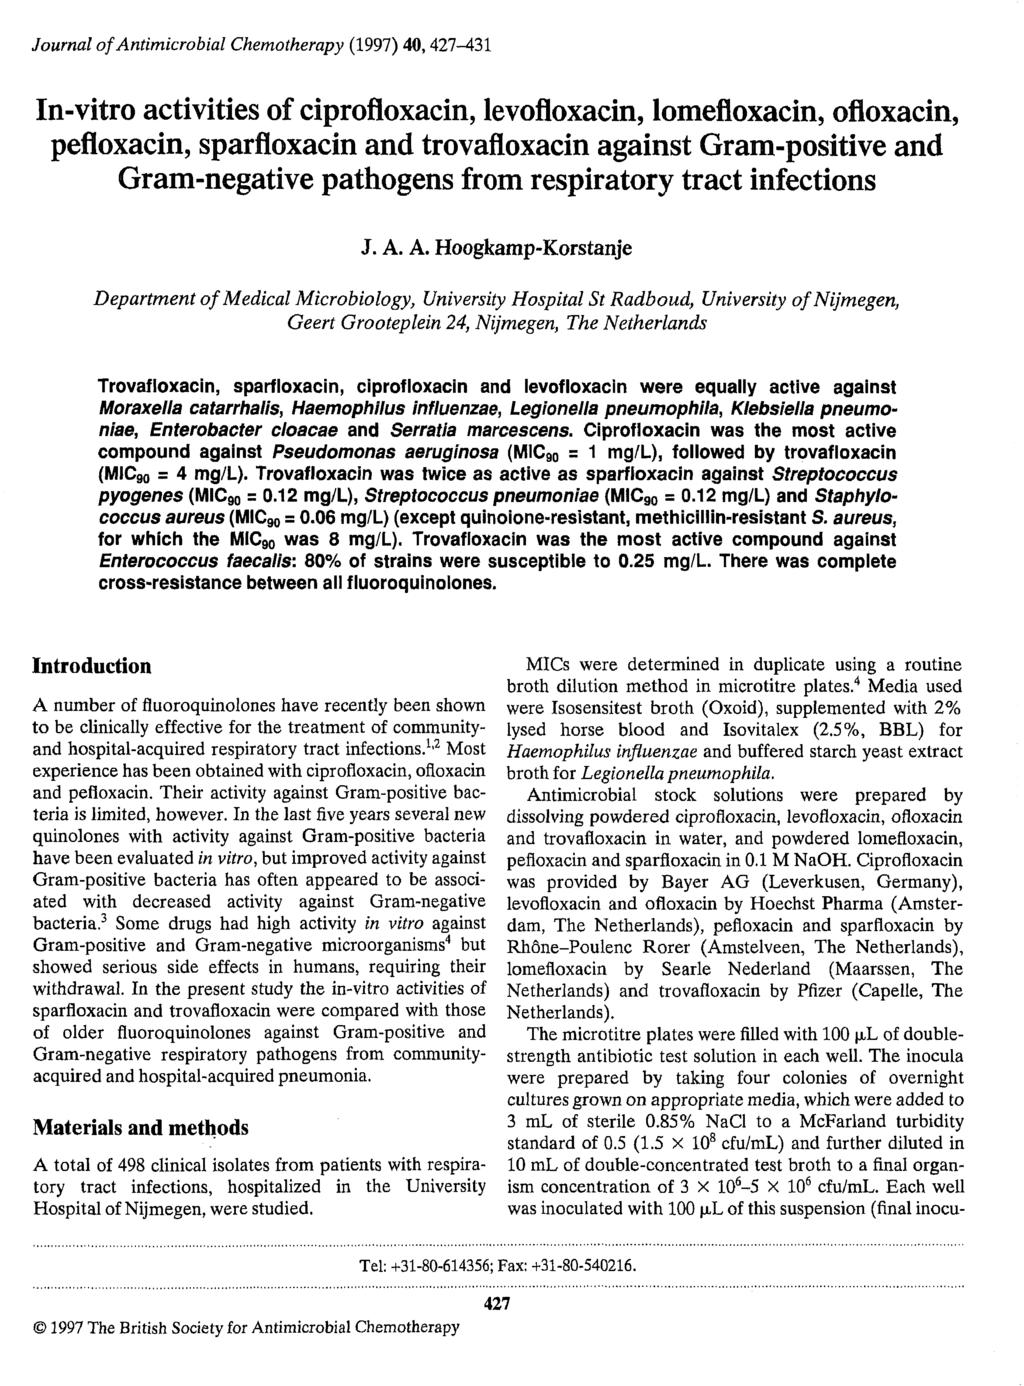 Journal of Antimicrobial Chemotherapy (1997) 40,427-431 In-vitro activities of ciprofloxacin, levofloxacin, lomefloxacin, ofloxacin, pefloxacin, sparfloxacin and trovafloxacin against Gram-positive